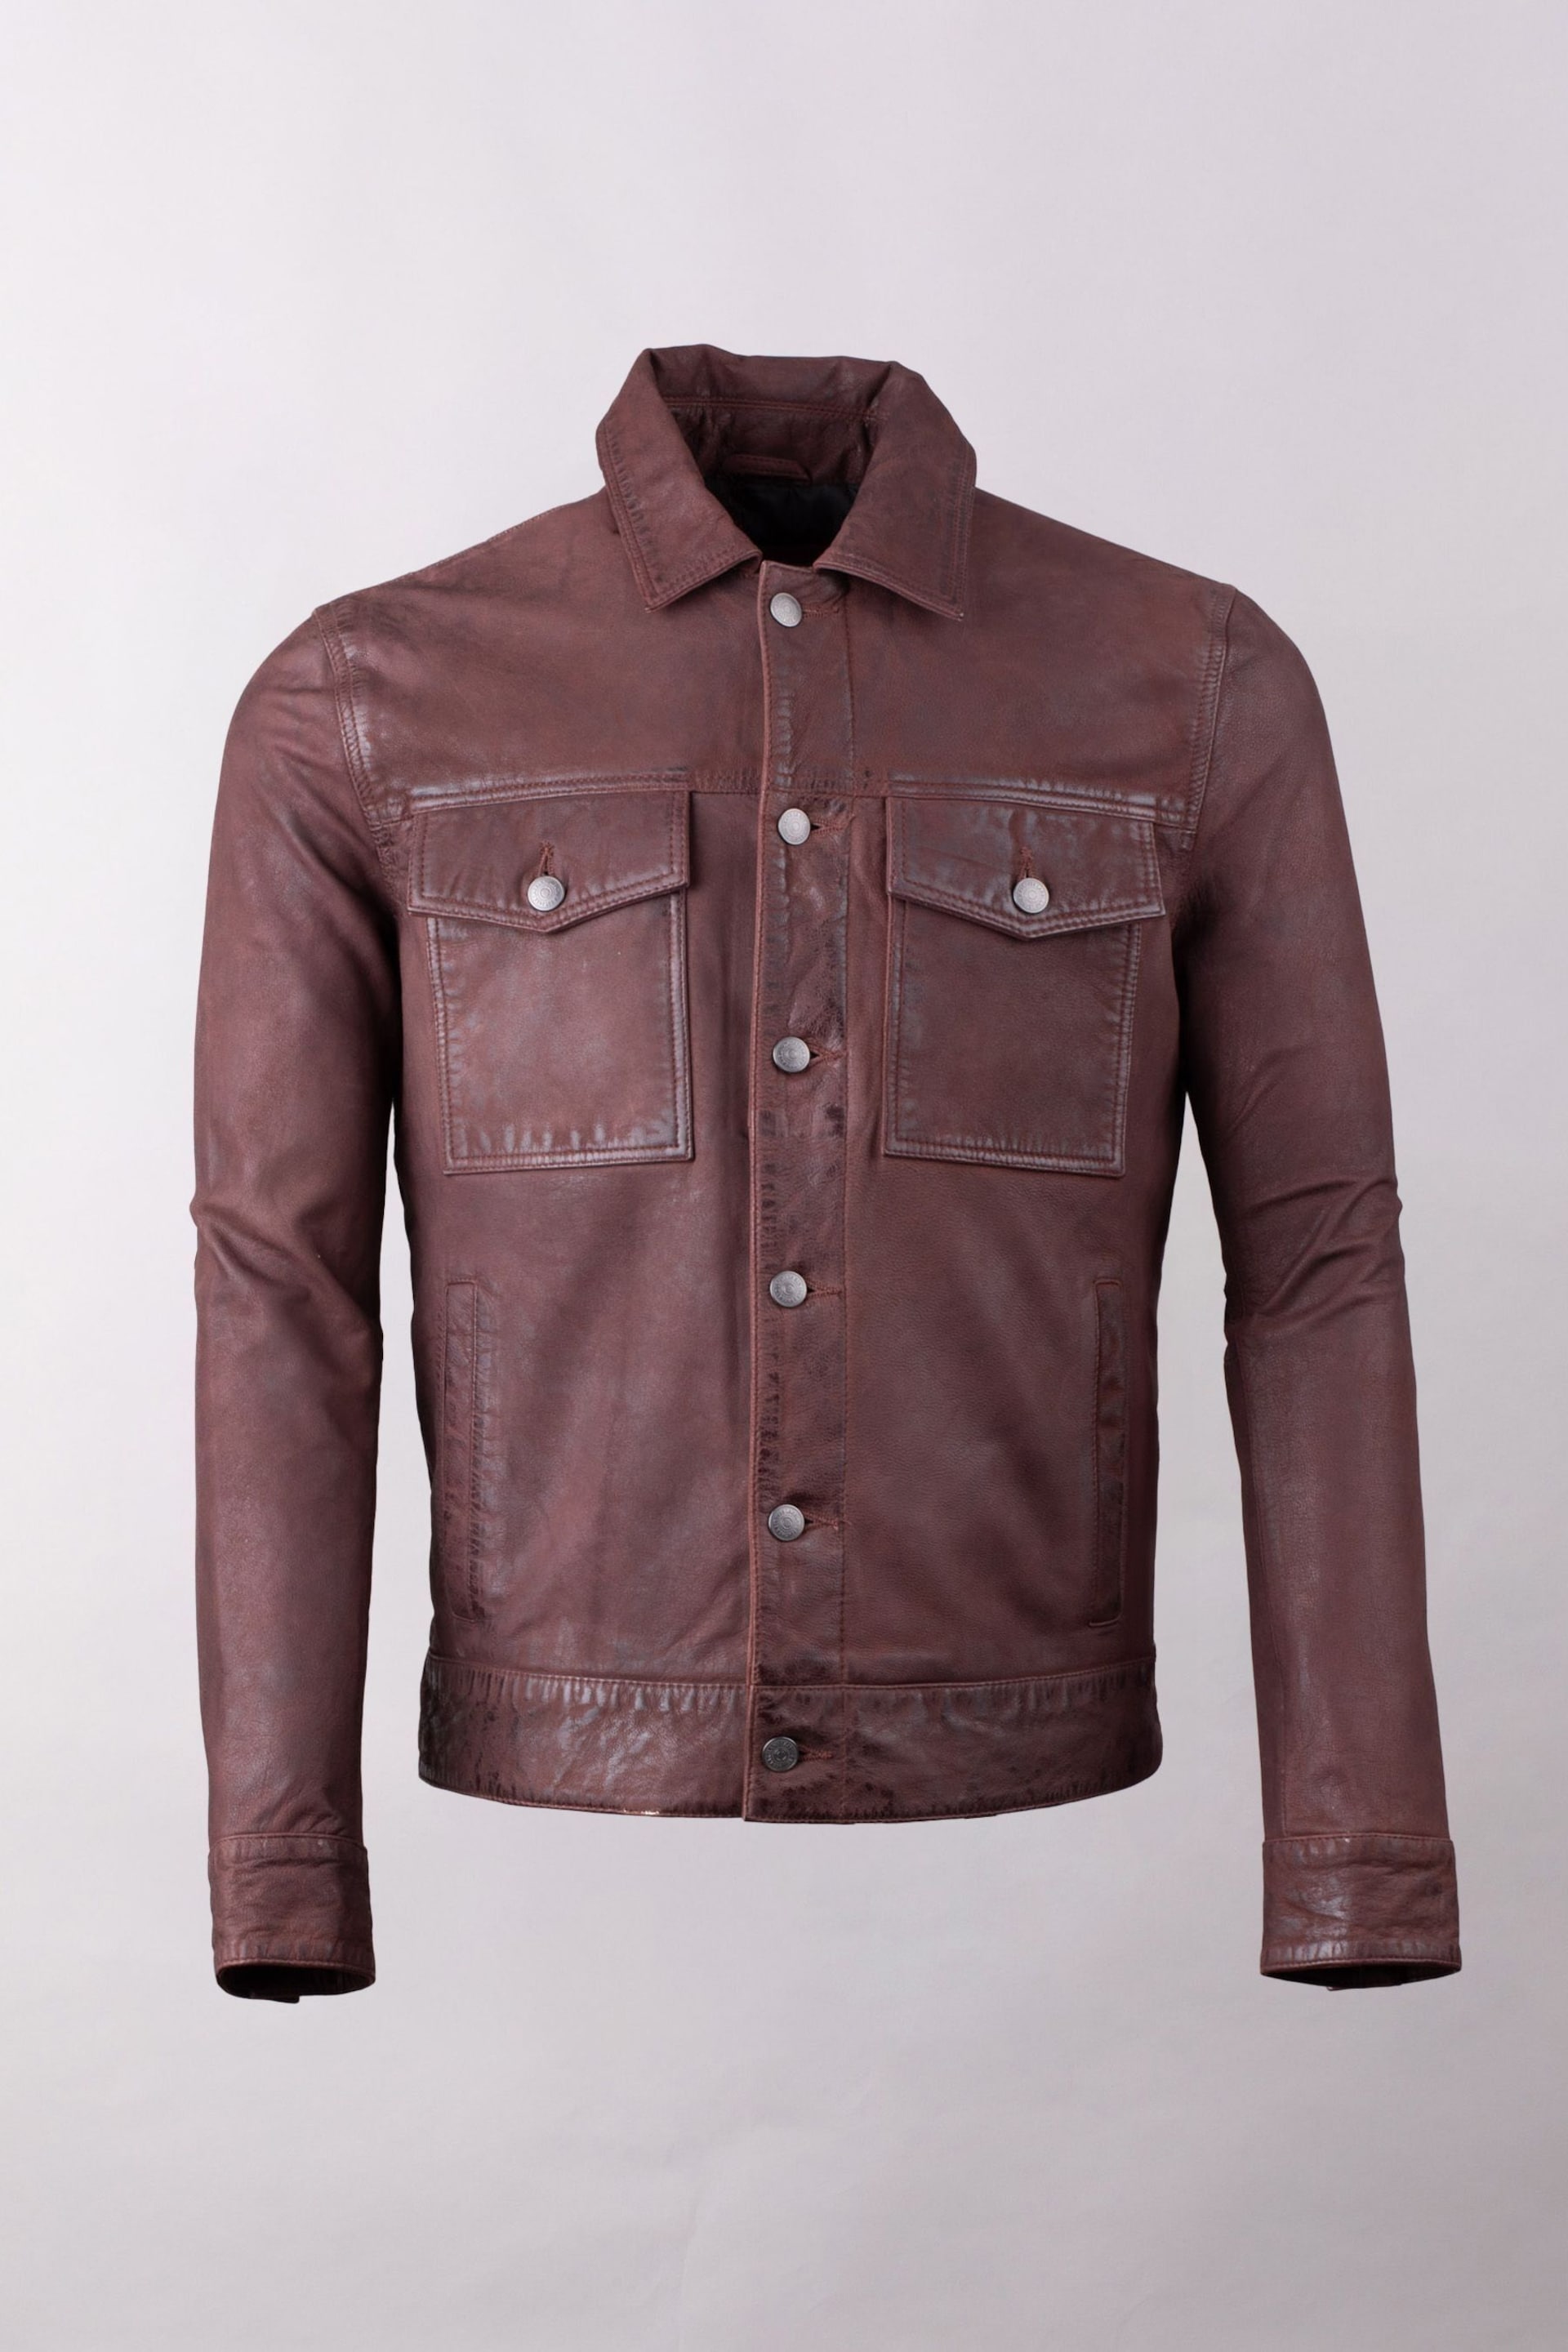 Lakeland Leather Brown Milburn Leather Jacket - Image 8 of 11